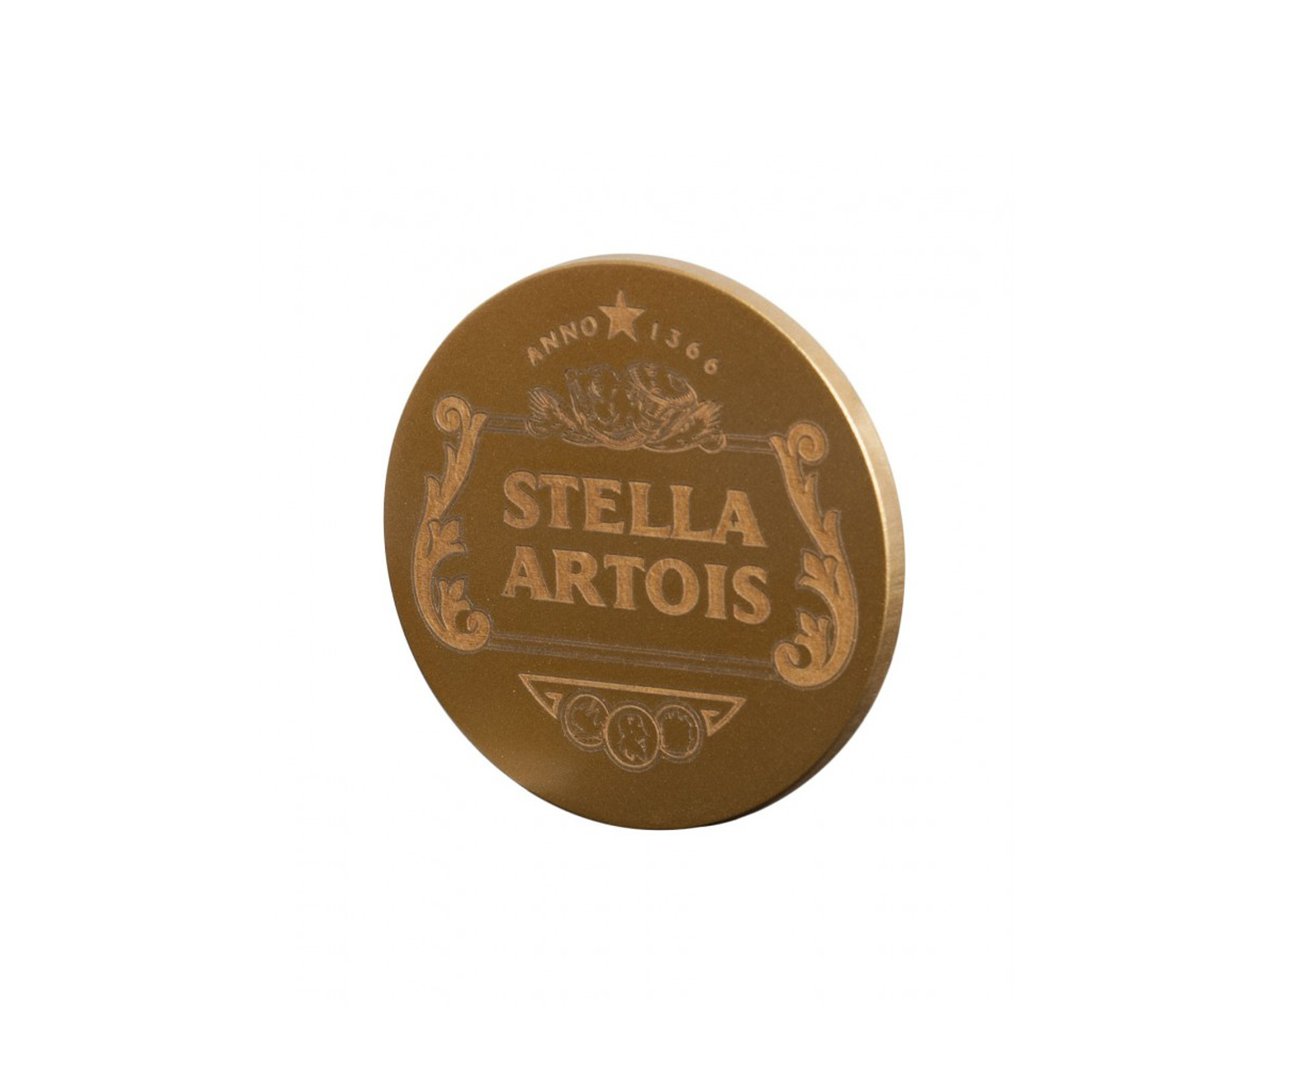 Porta Stella Artois Redondo - Geton